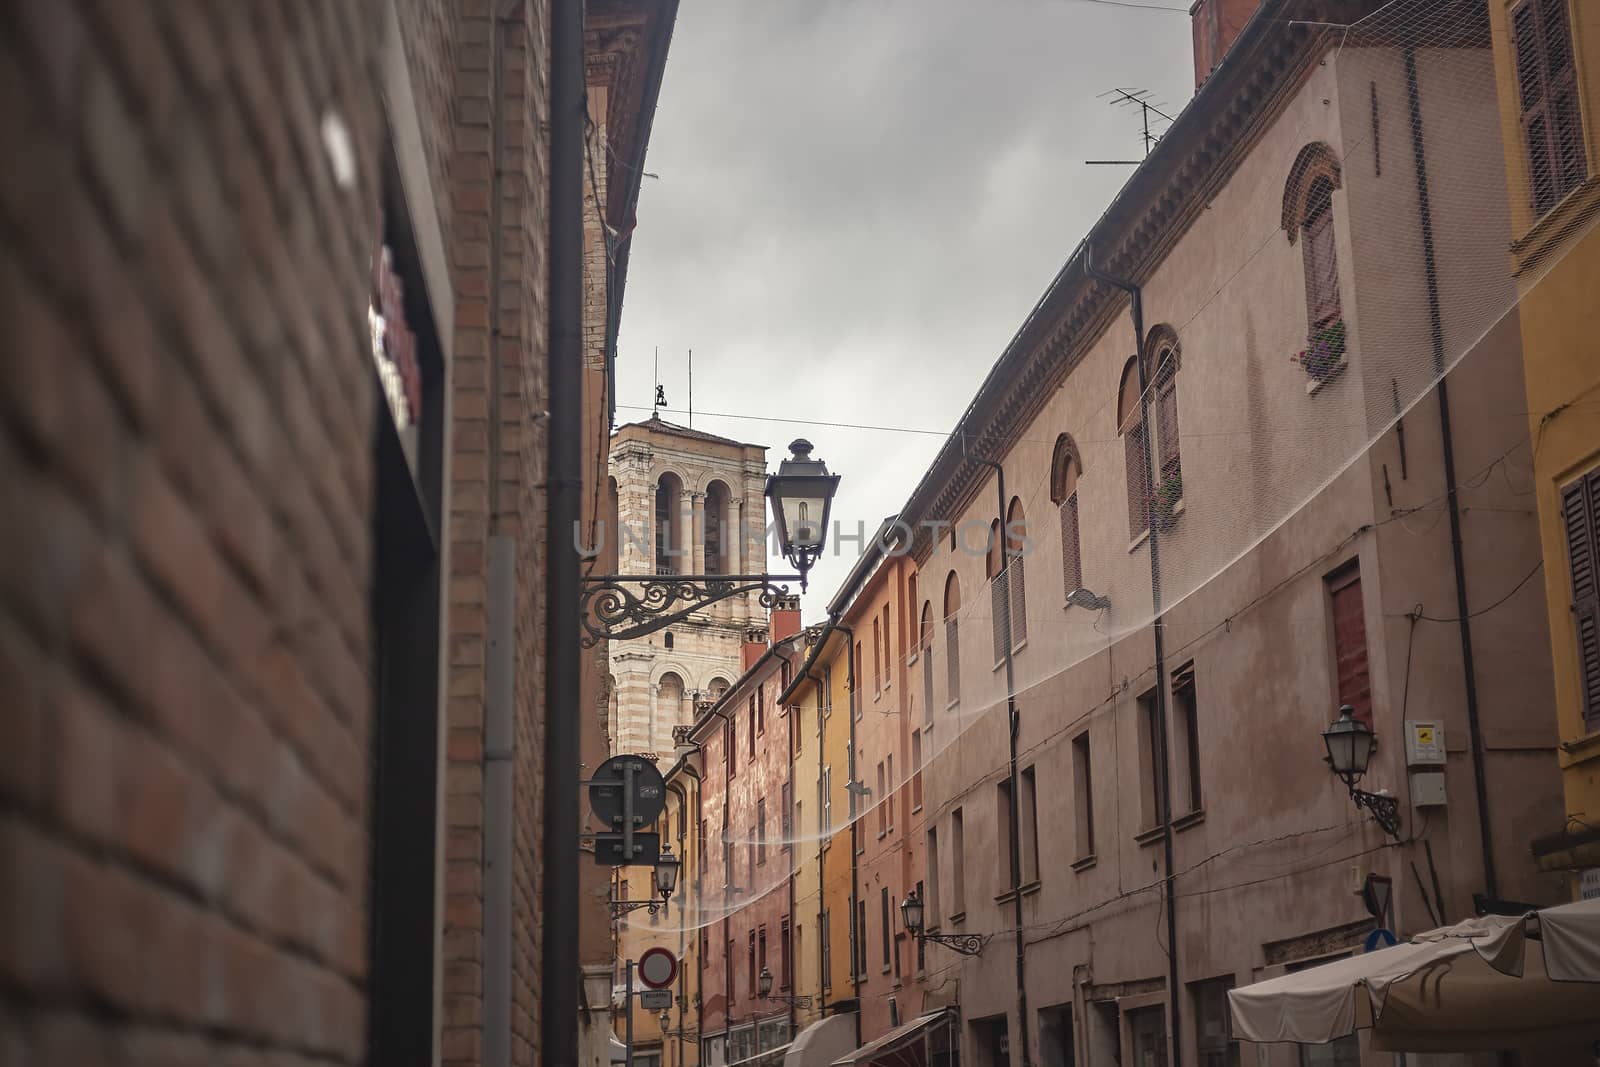 Detail of historical buildings in Ferrara by pippocarlot